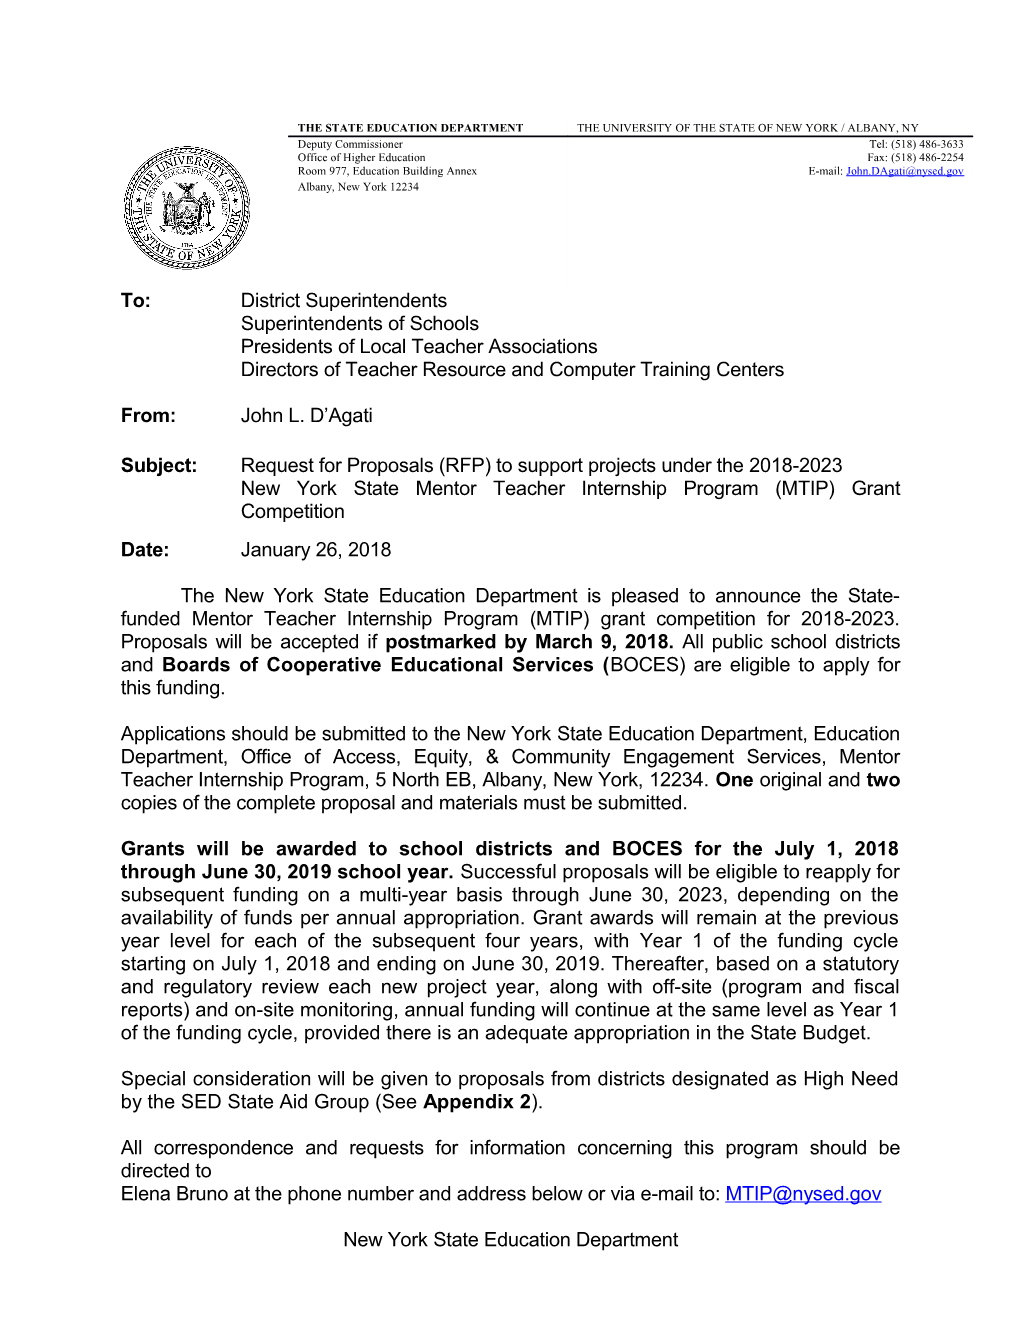 Request for Proposals (RFP) New York State Mentor Teacher Internship Program (MTIP) Grant